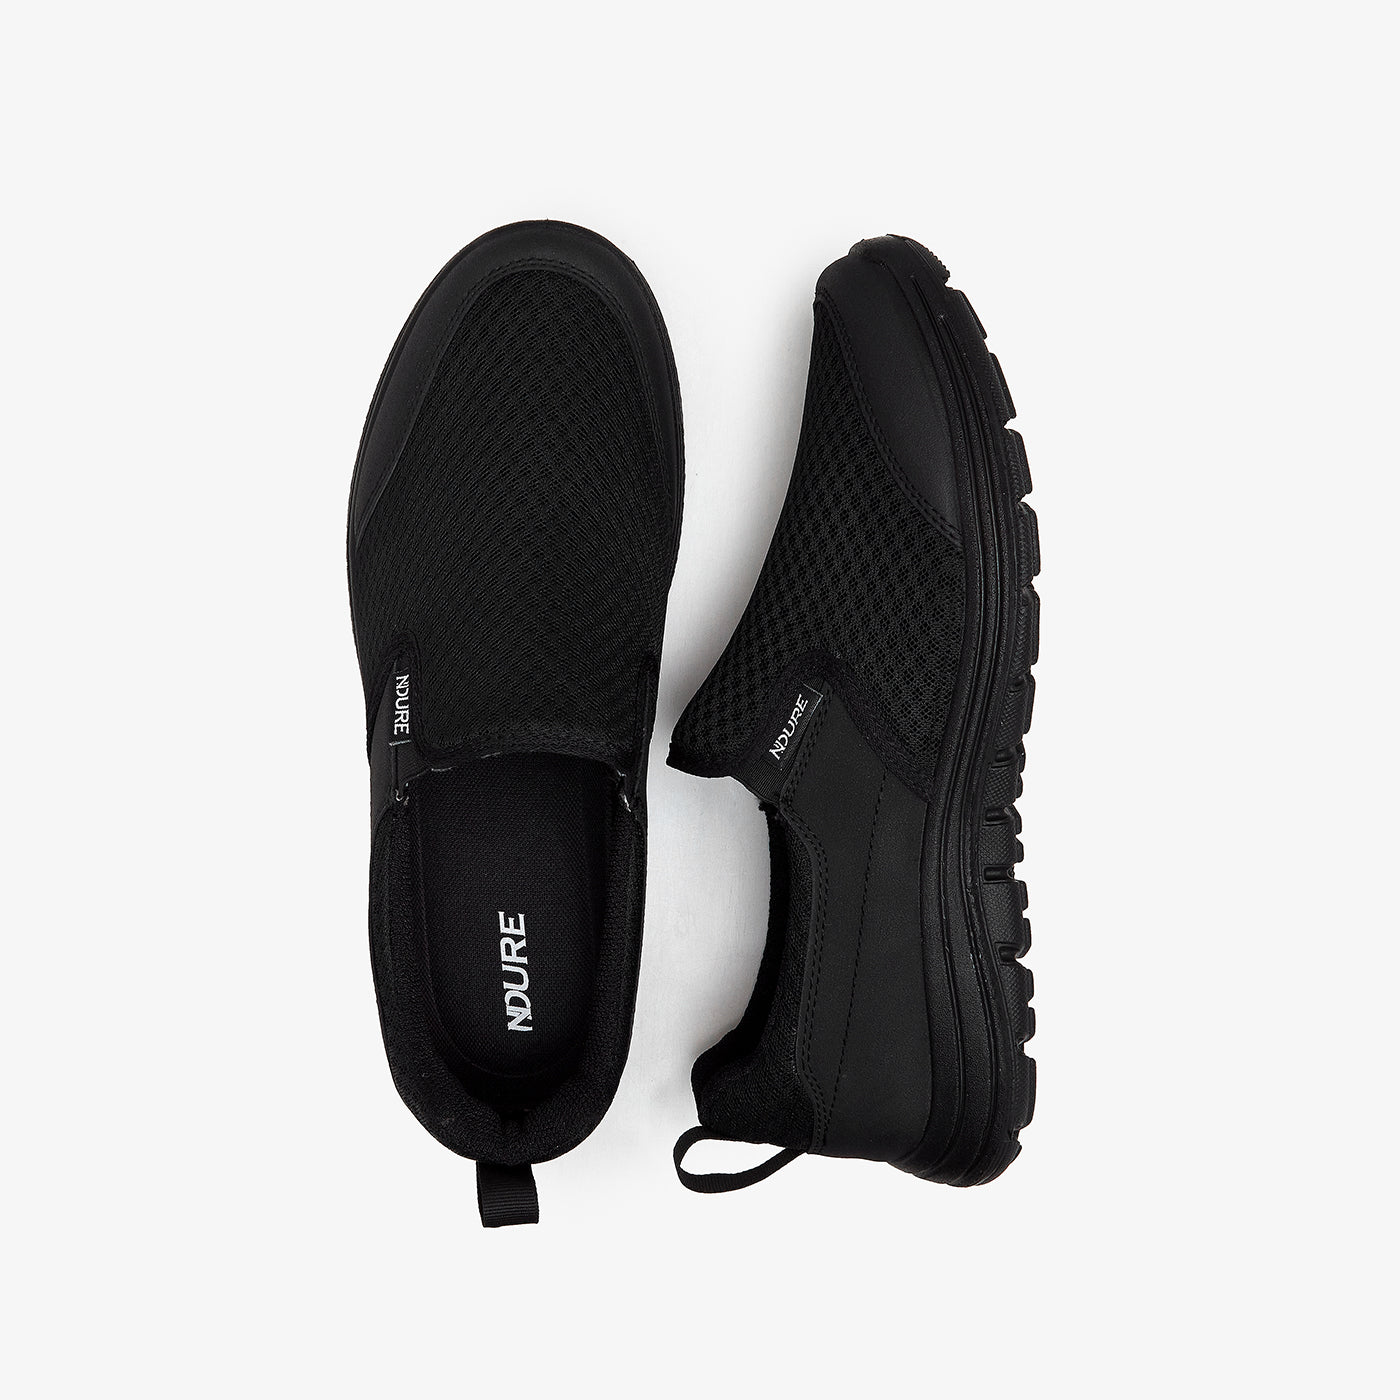 Slip-On Sports Shoes for Men